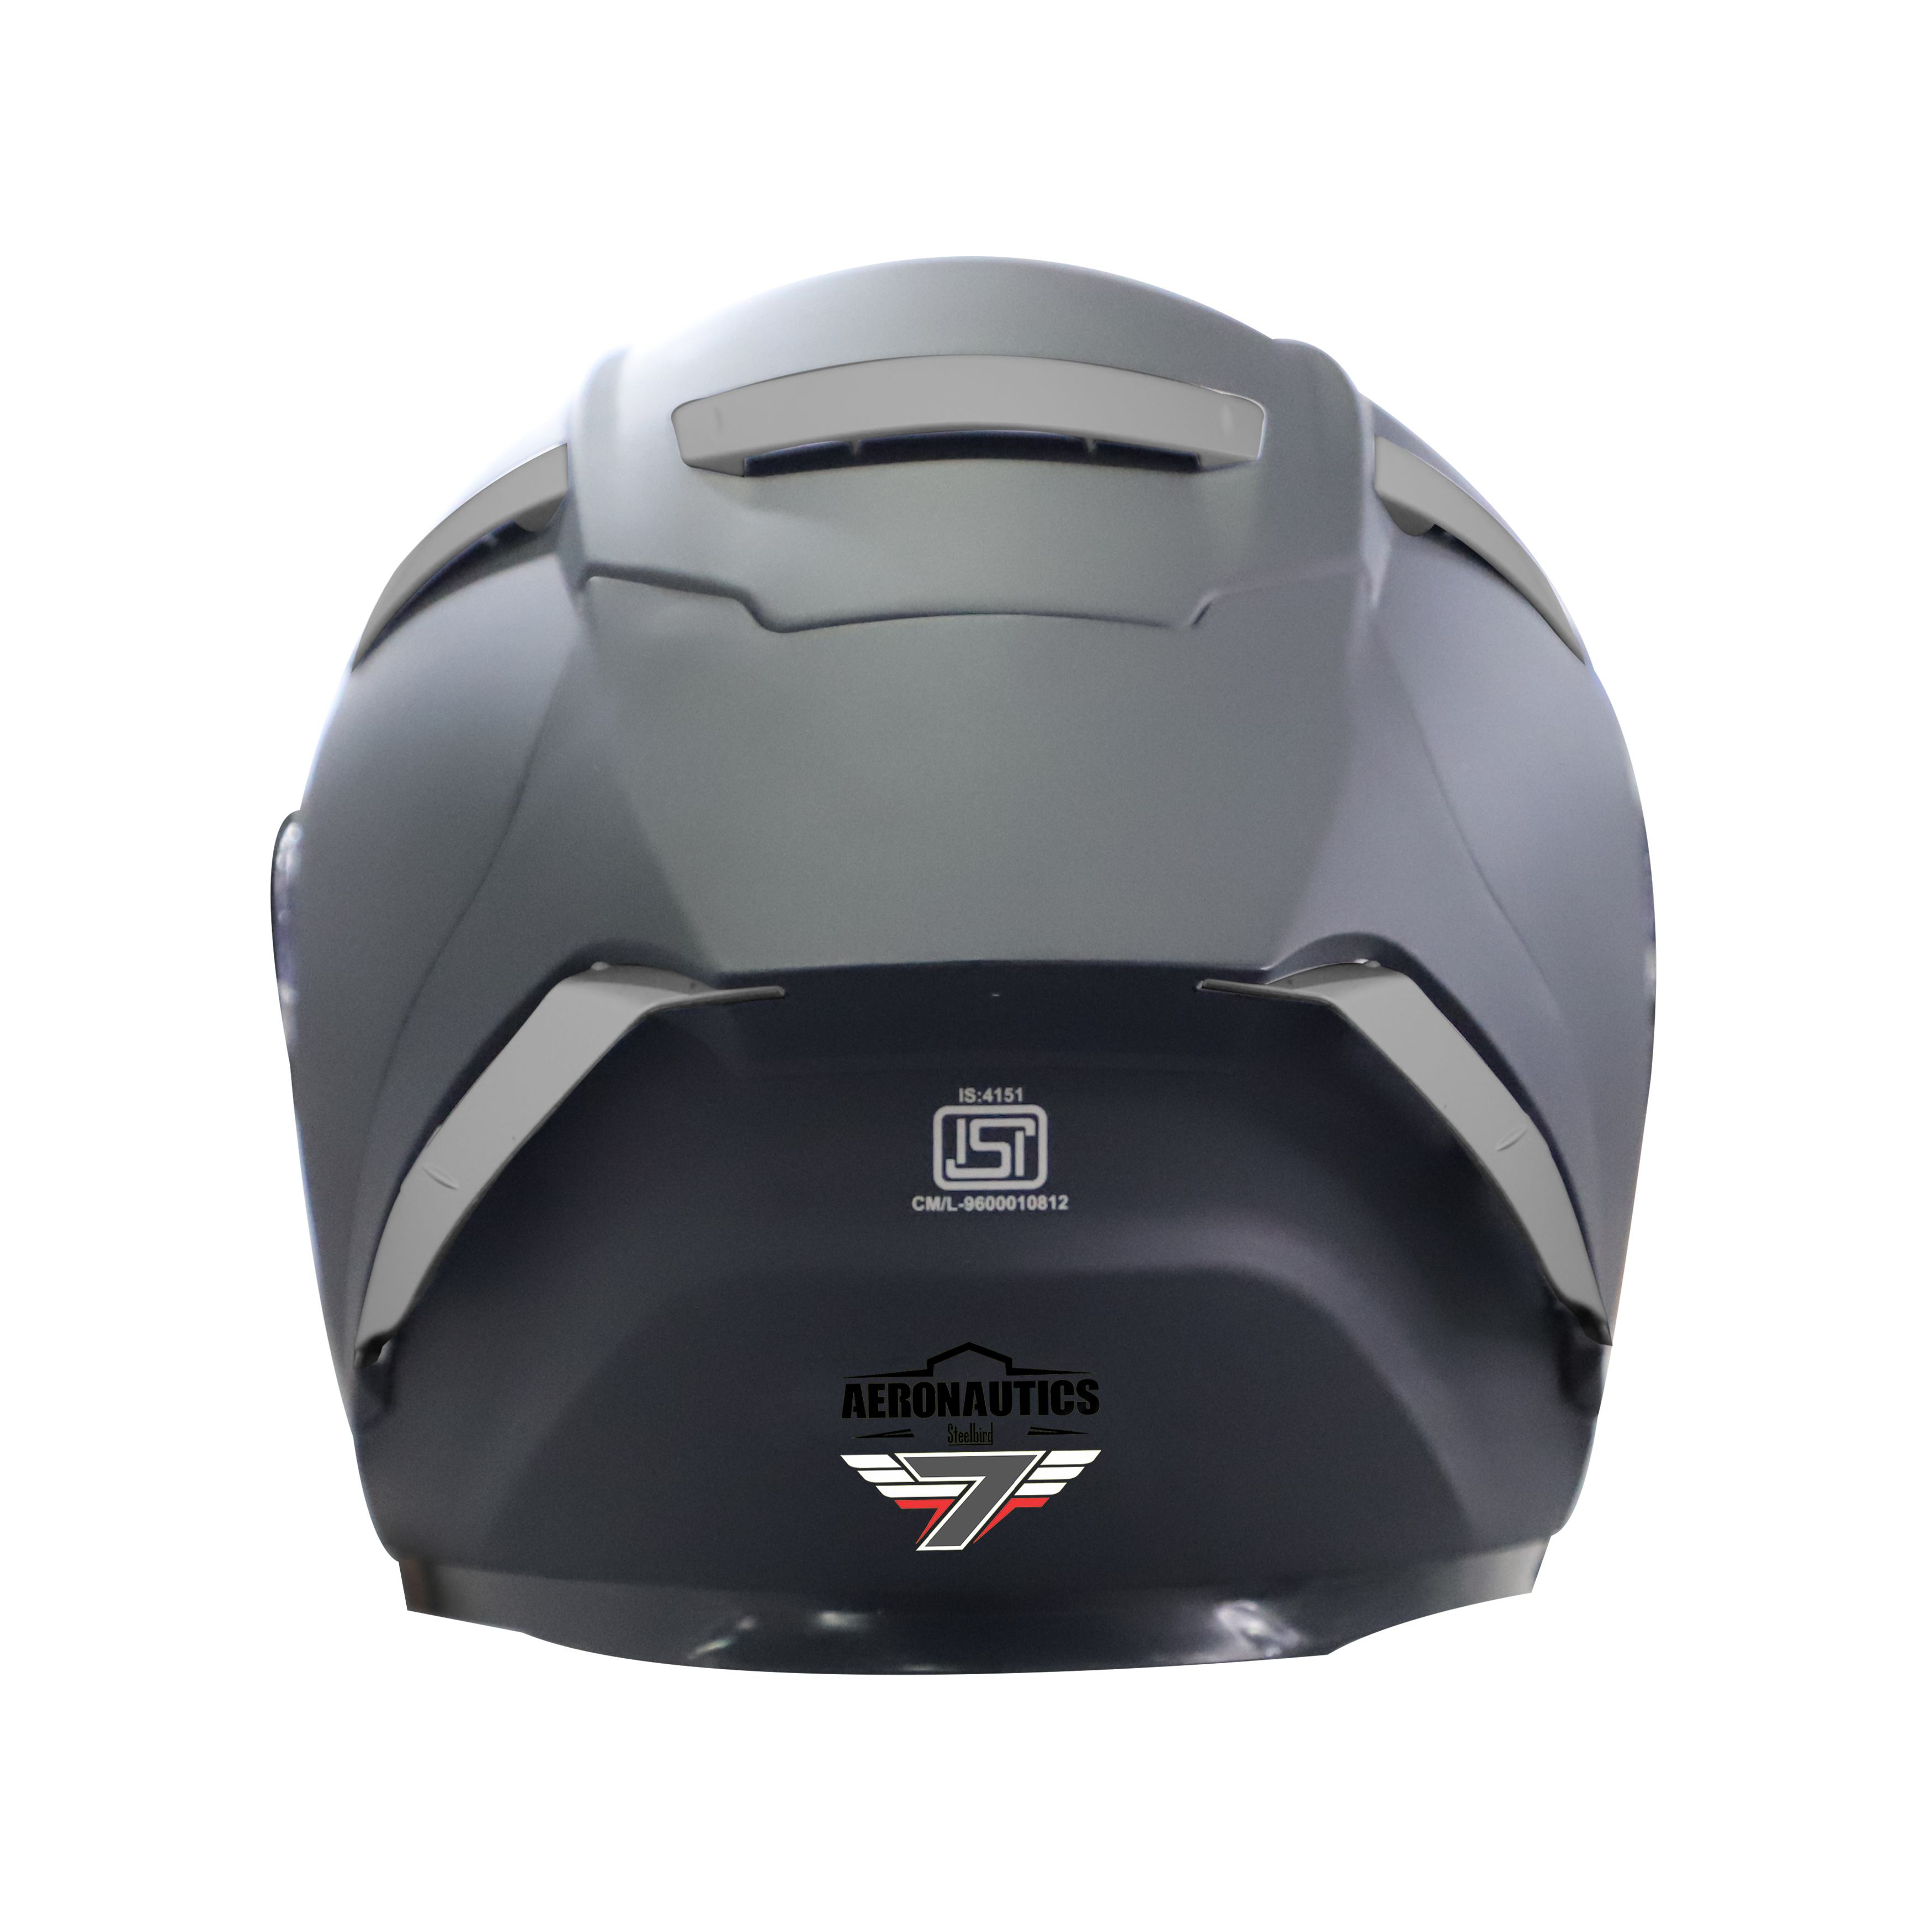 Steelbird SA-2 7Wings Super Aeronautics Full Face Helmet (Matt Midnight Black With Chrome Gold Visor)